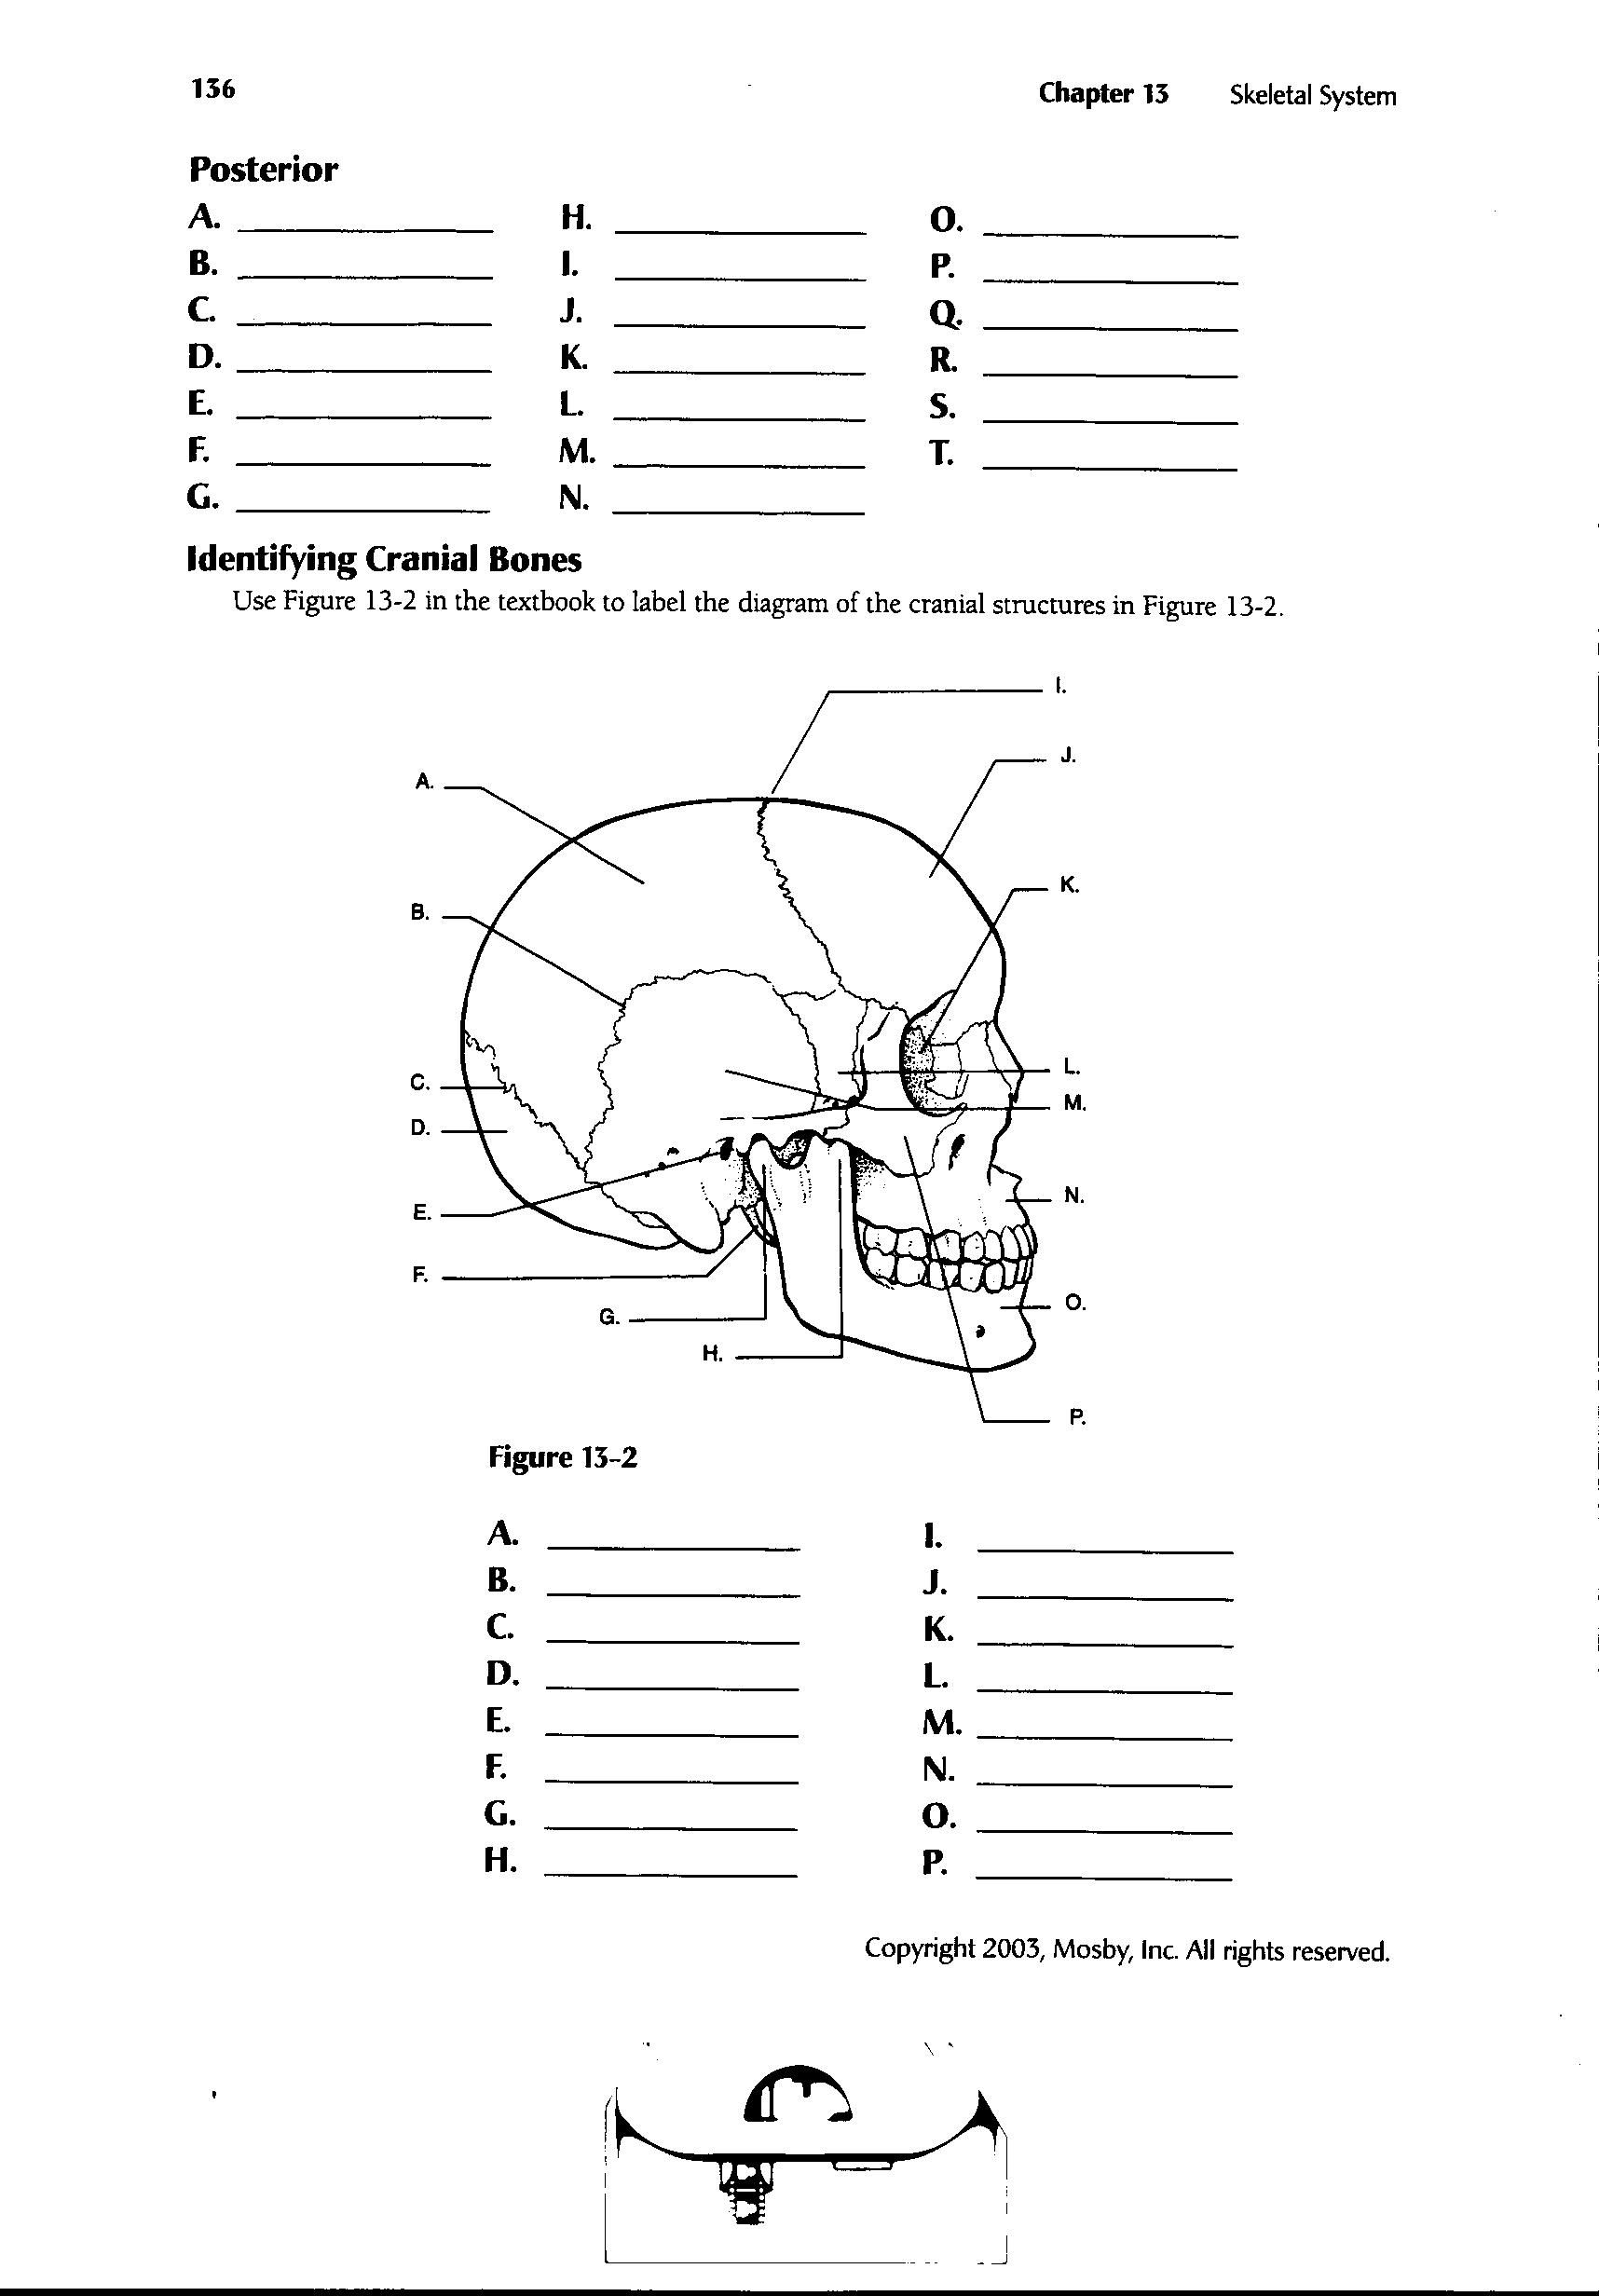 Anatomy And Physiology Printable Worksheets | Printable ...